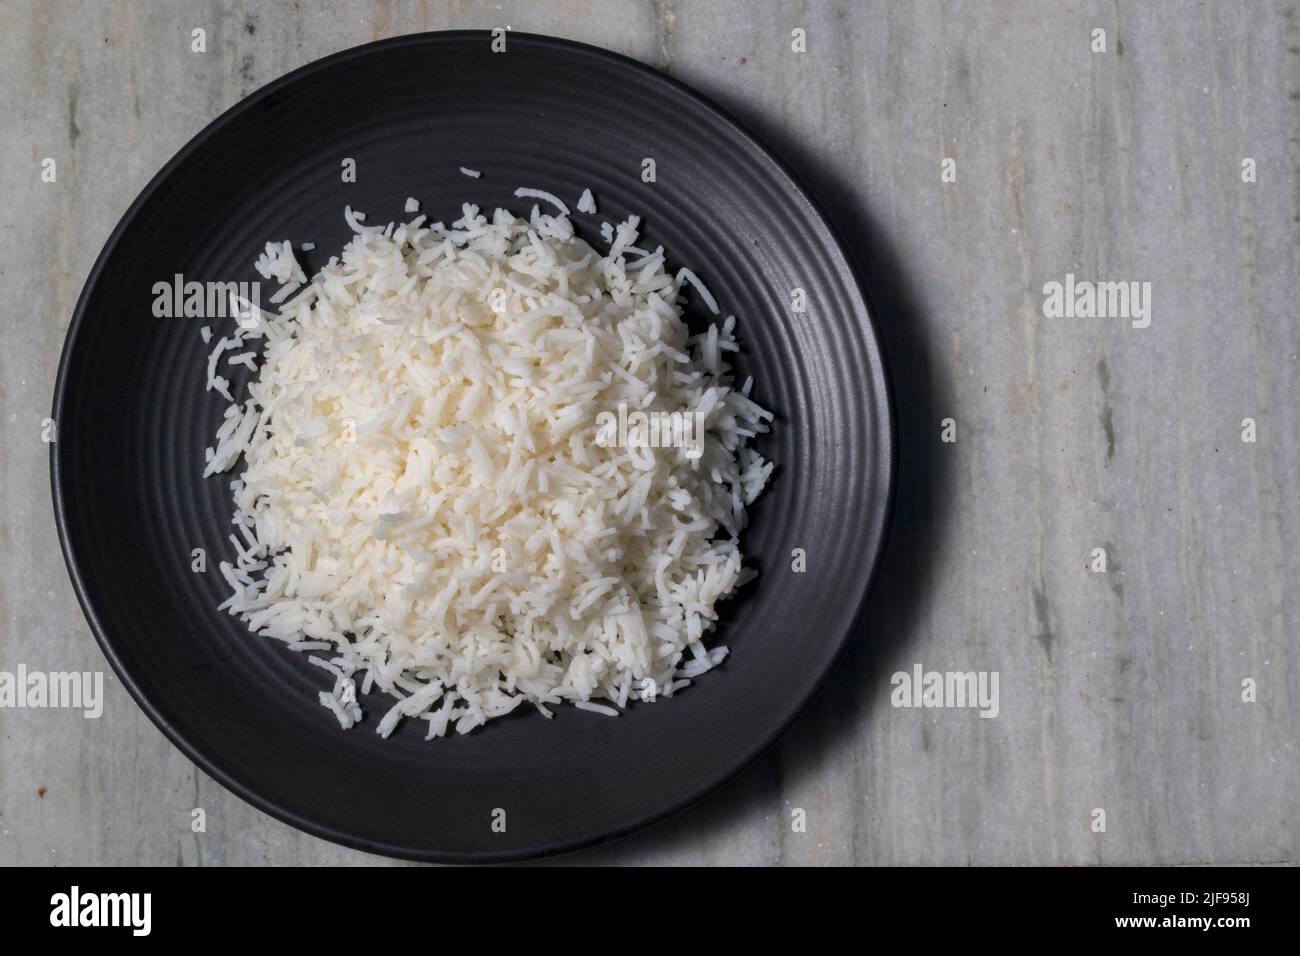 Basmati Rice on a black ceramic plate. Stock Photo